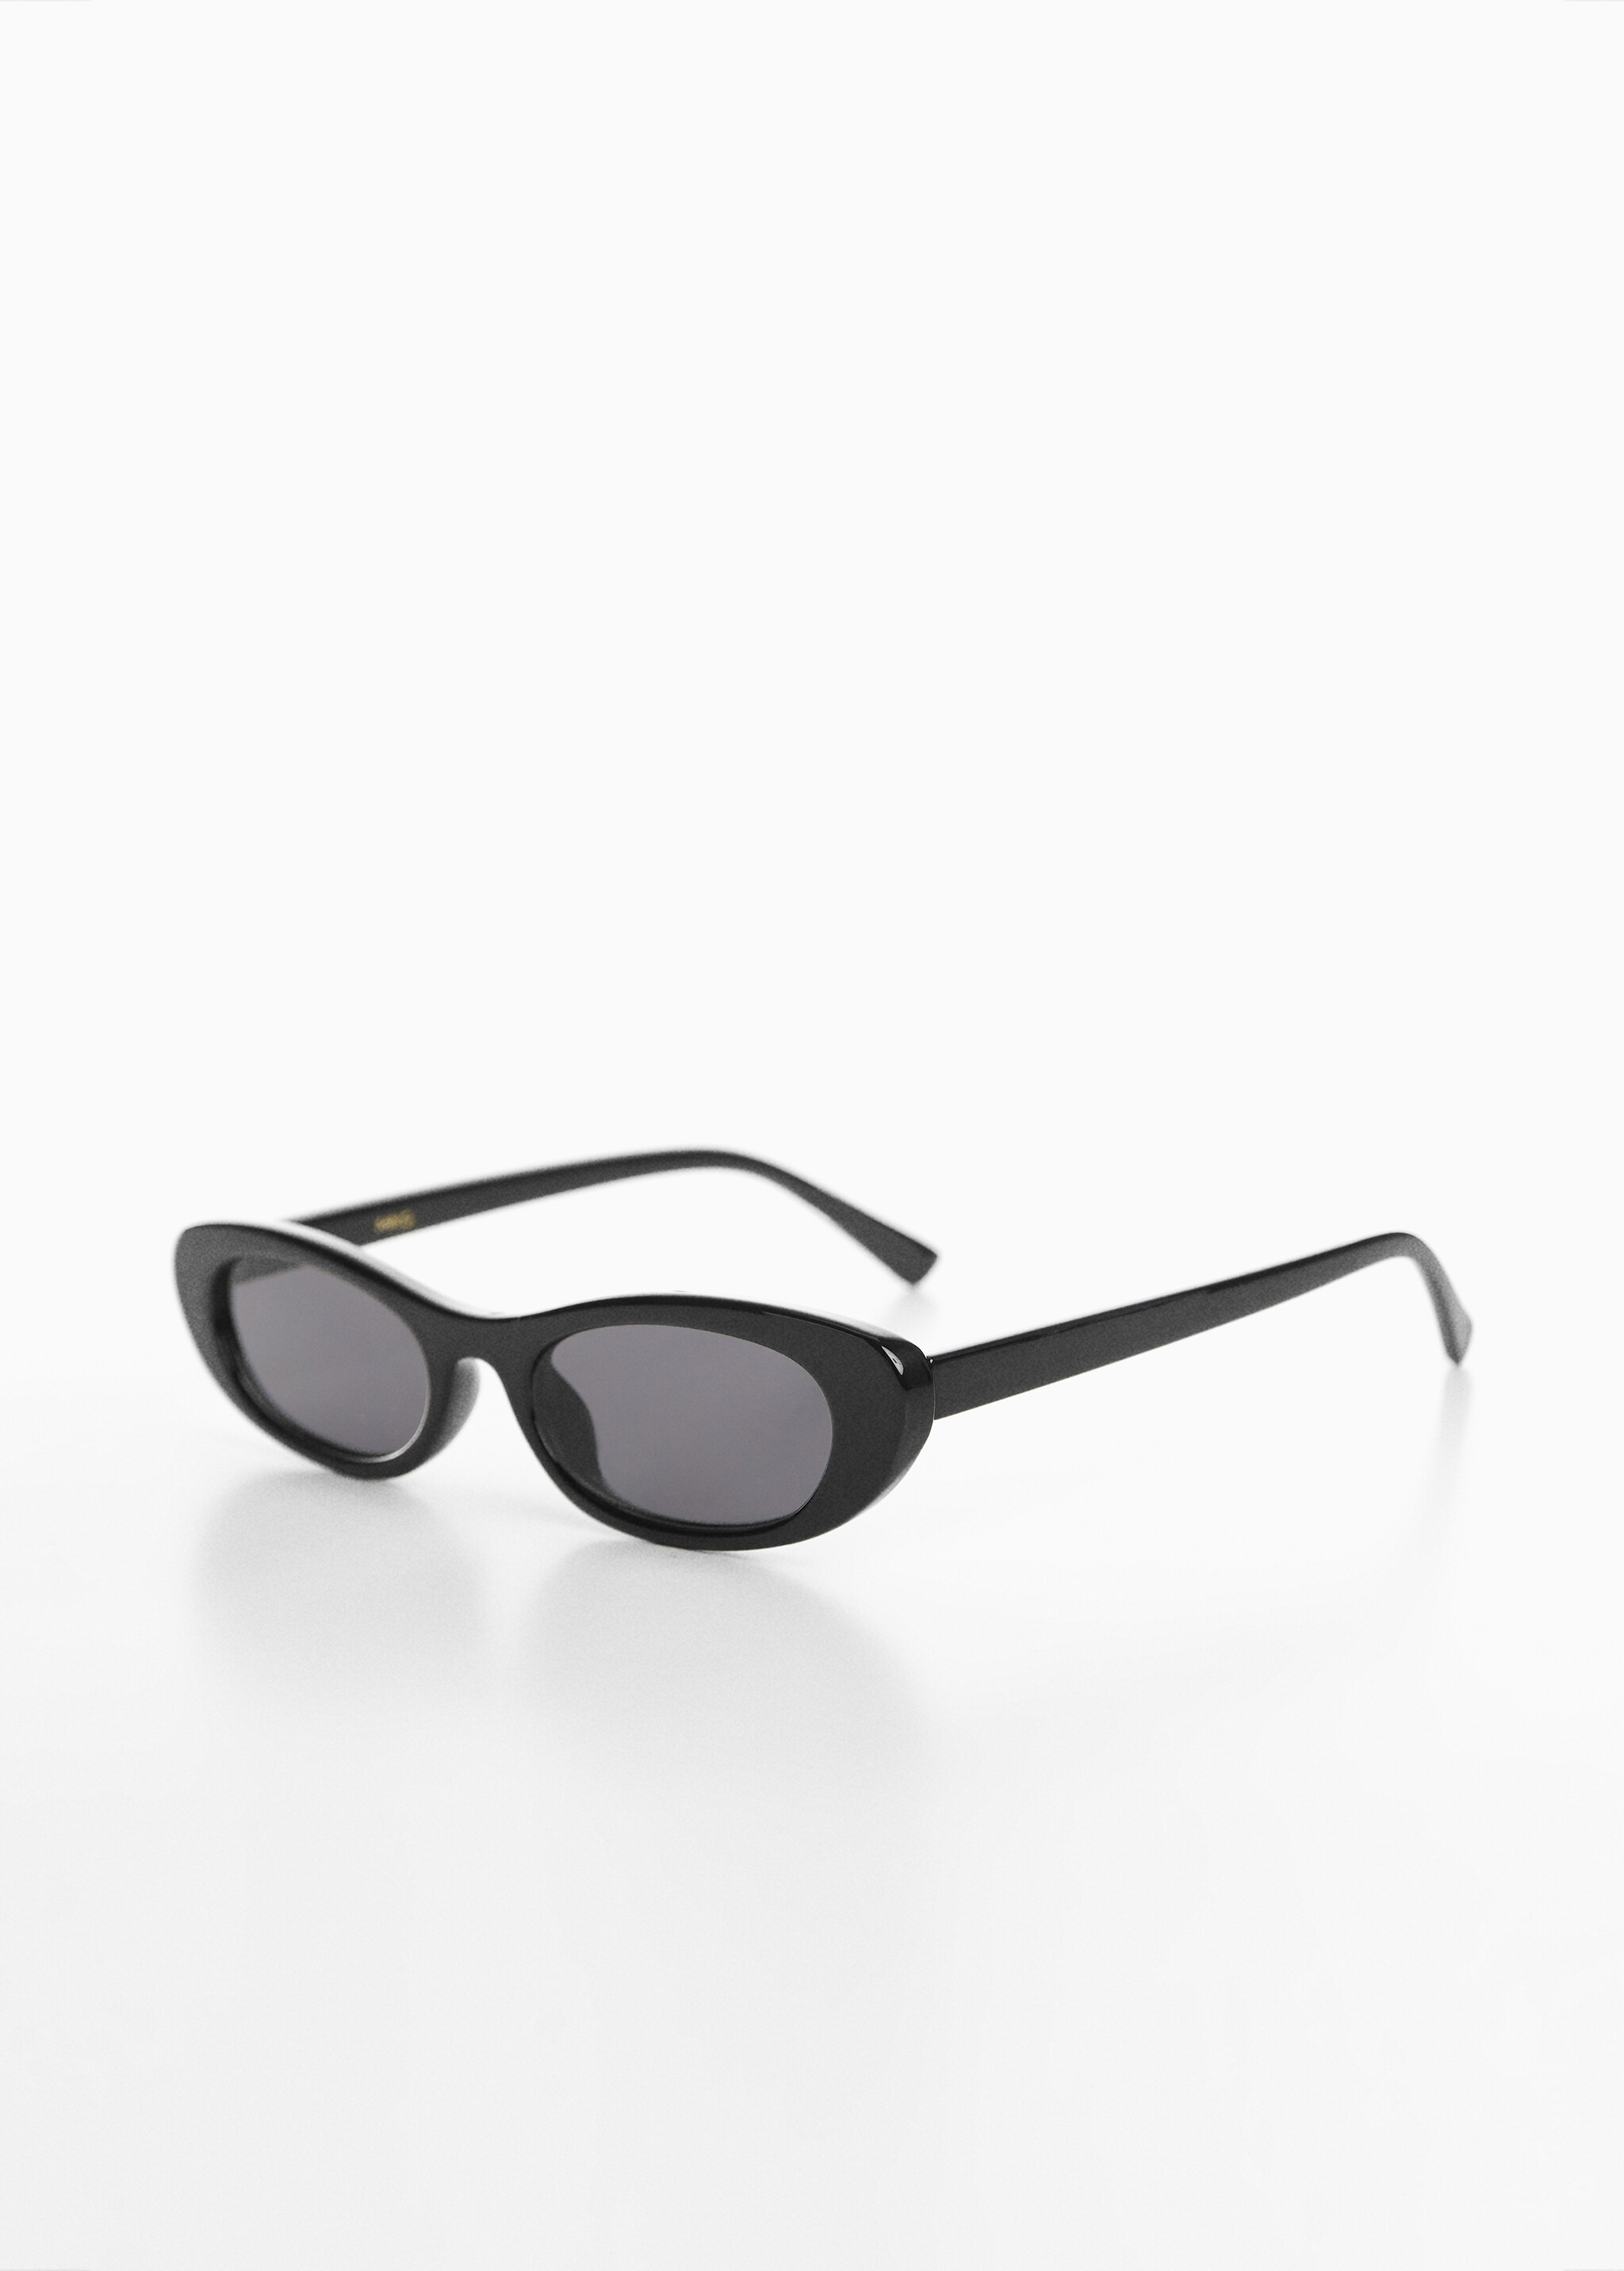 Oval sunglasses - Medium plane